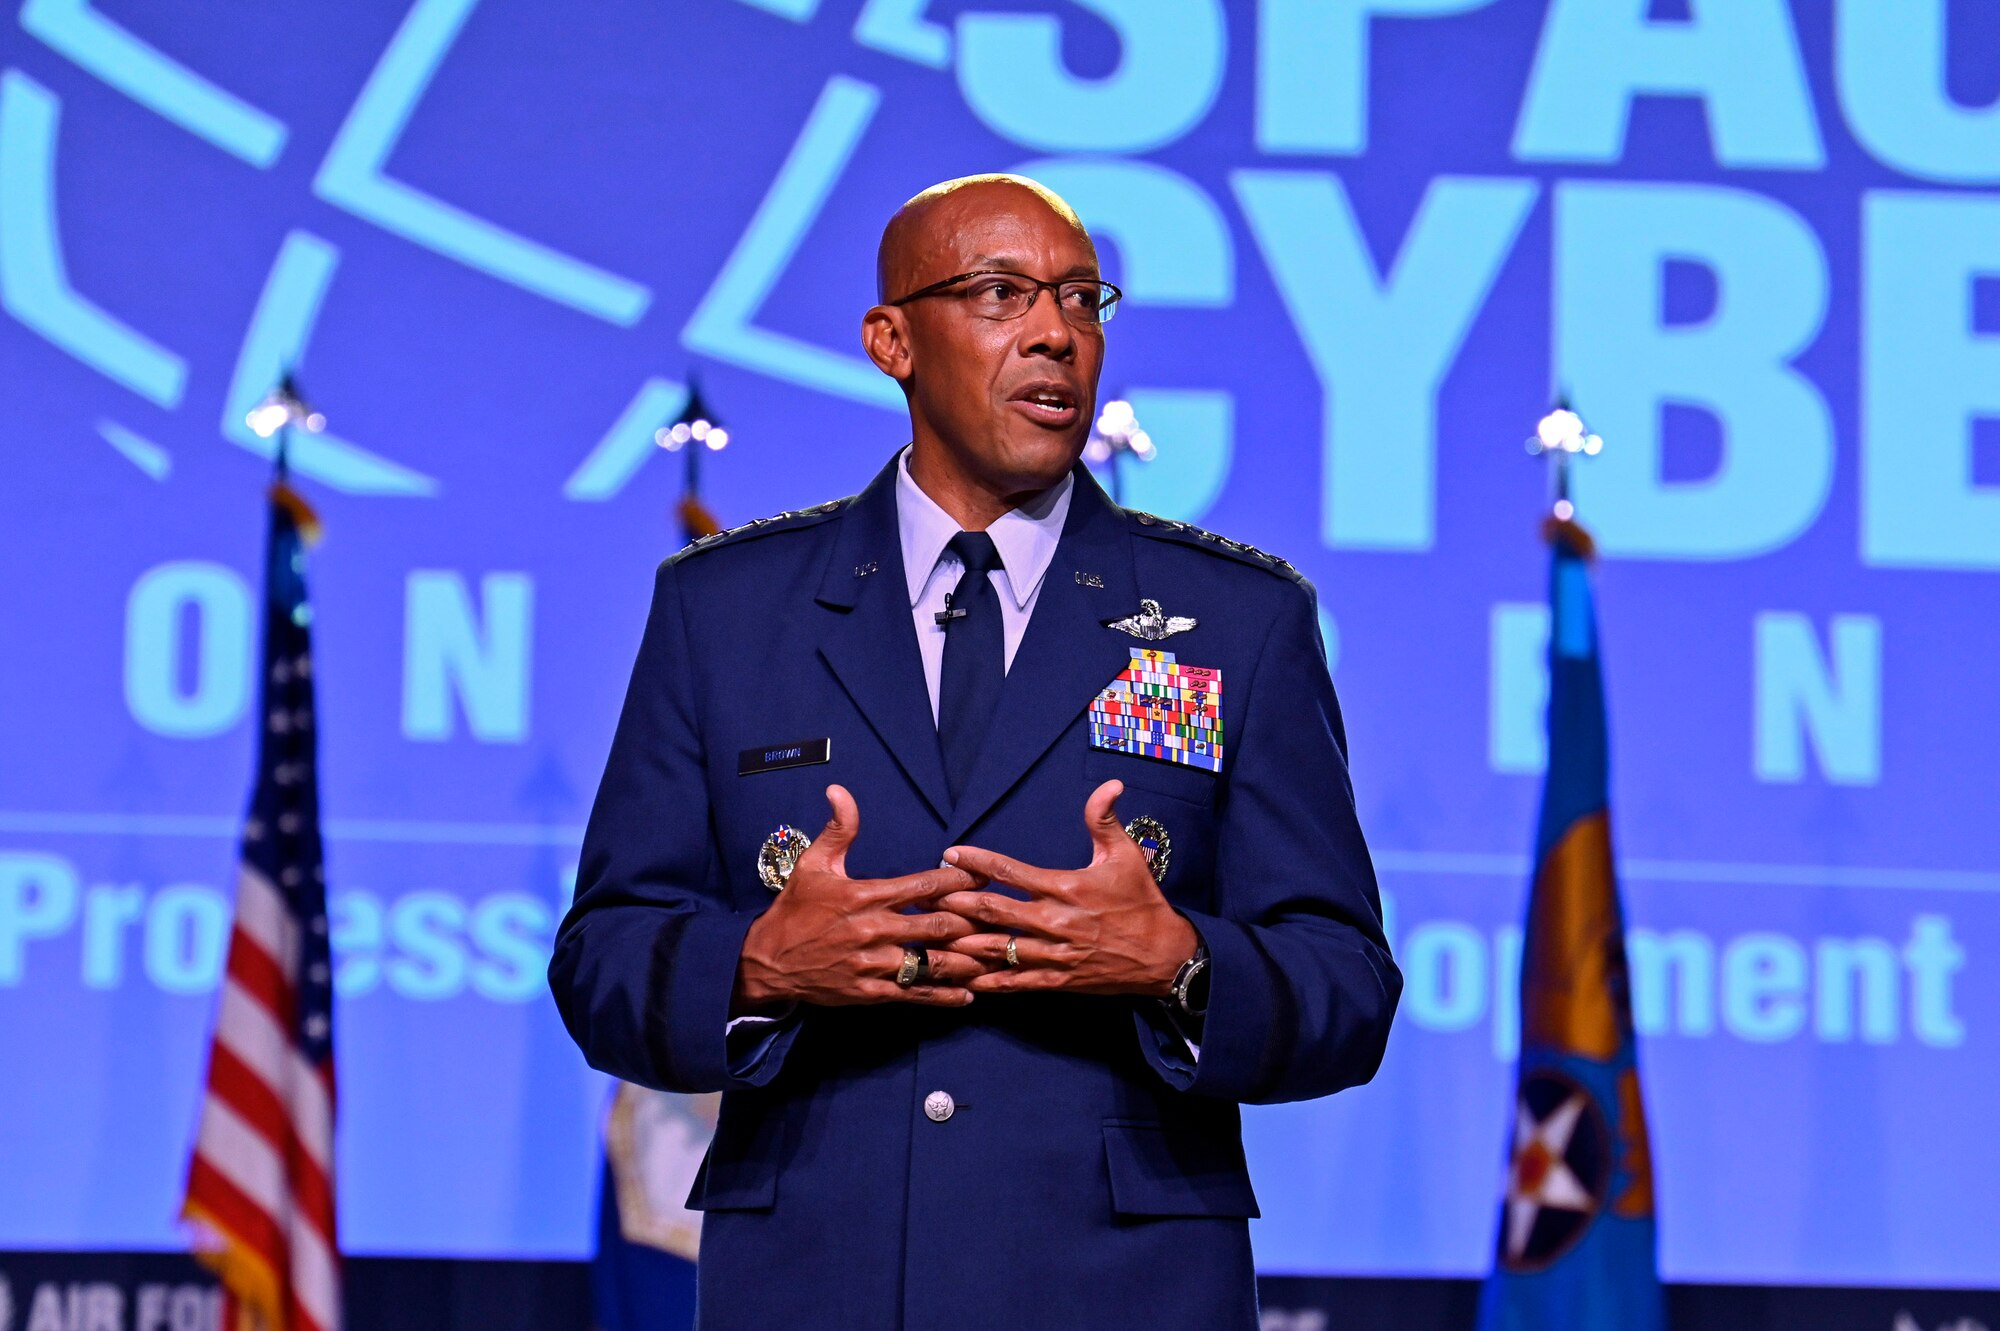 CSAF Brown Accelerate Change to Empowered Airmen Speech